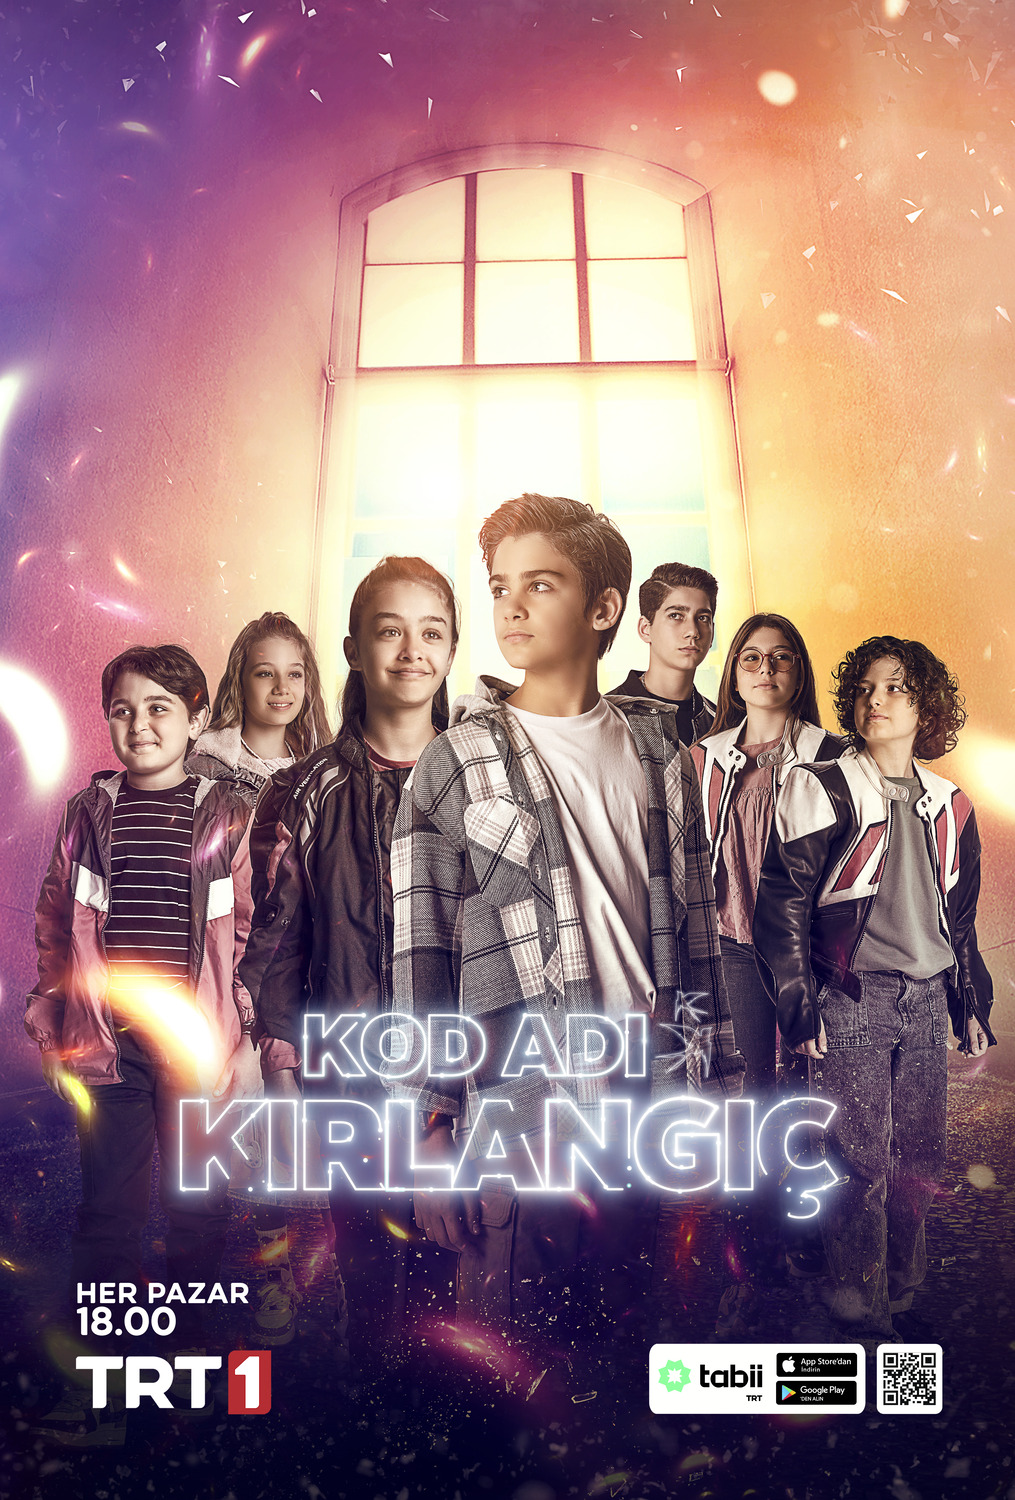 Extra Large TV Poster Image for Kod Adı Kırlangıç (#3 of 11)